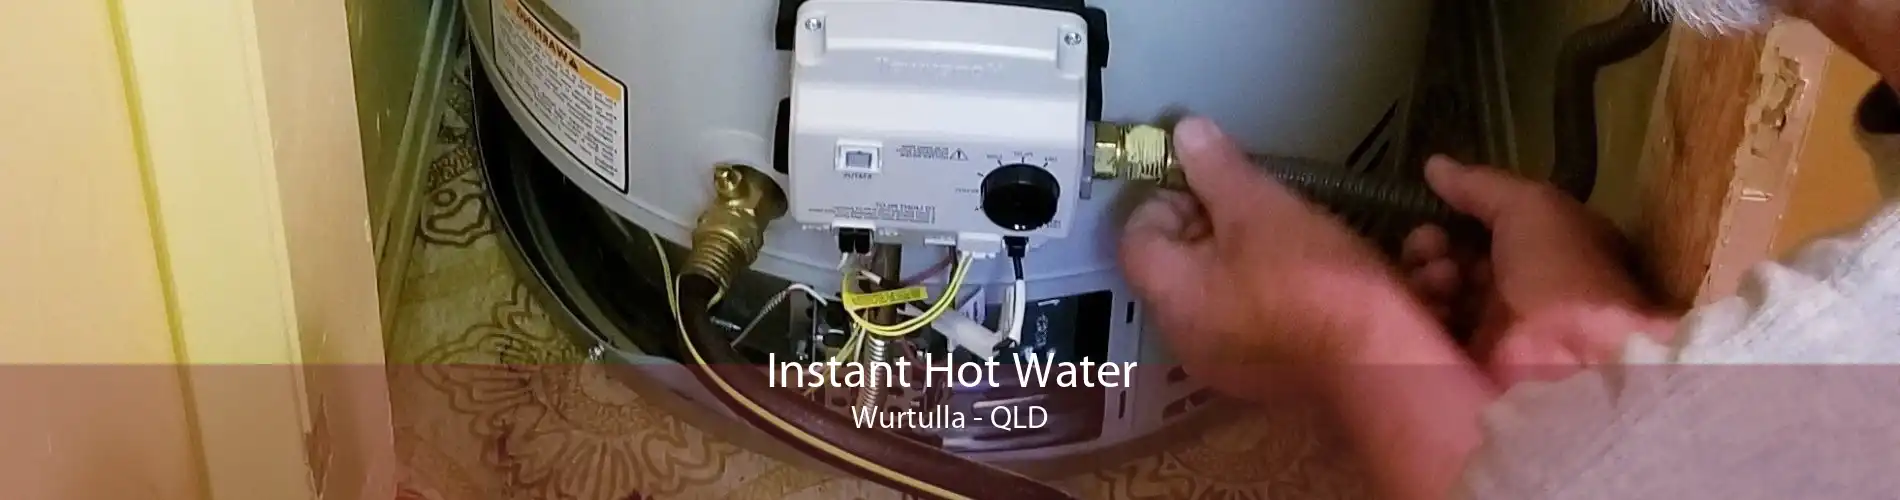 Instant Hot Water Wurtulla - QLD